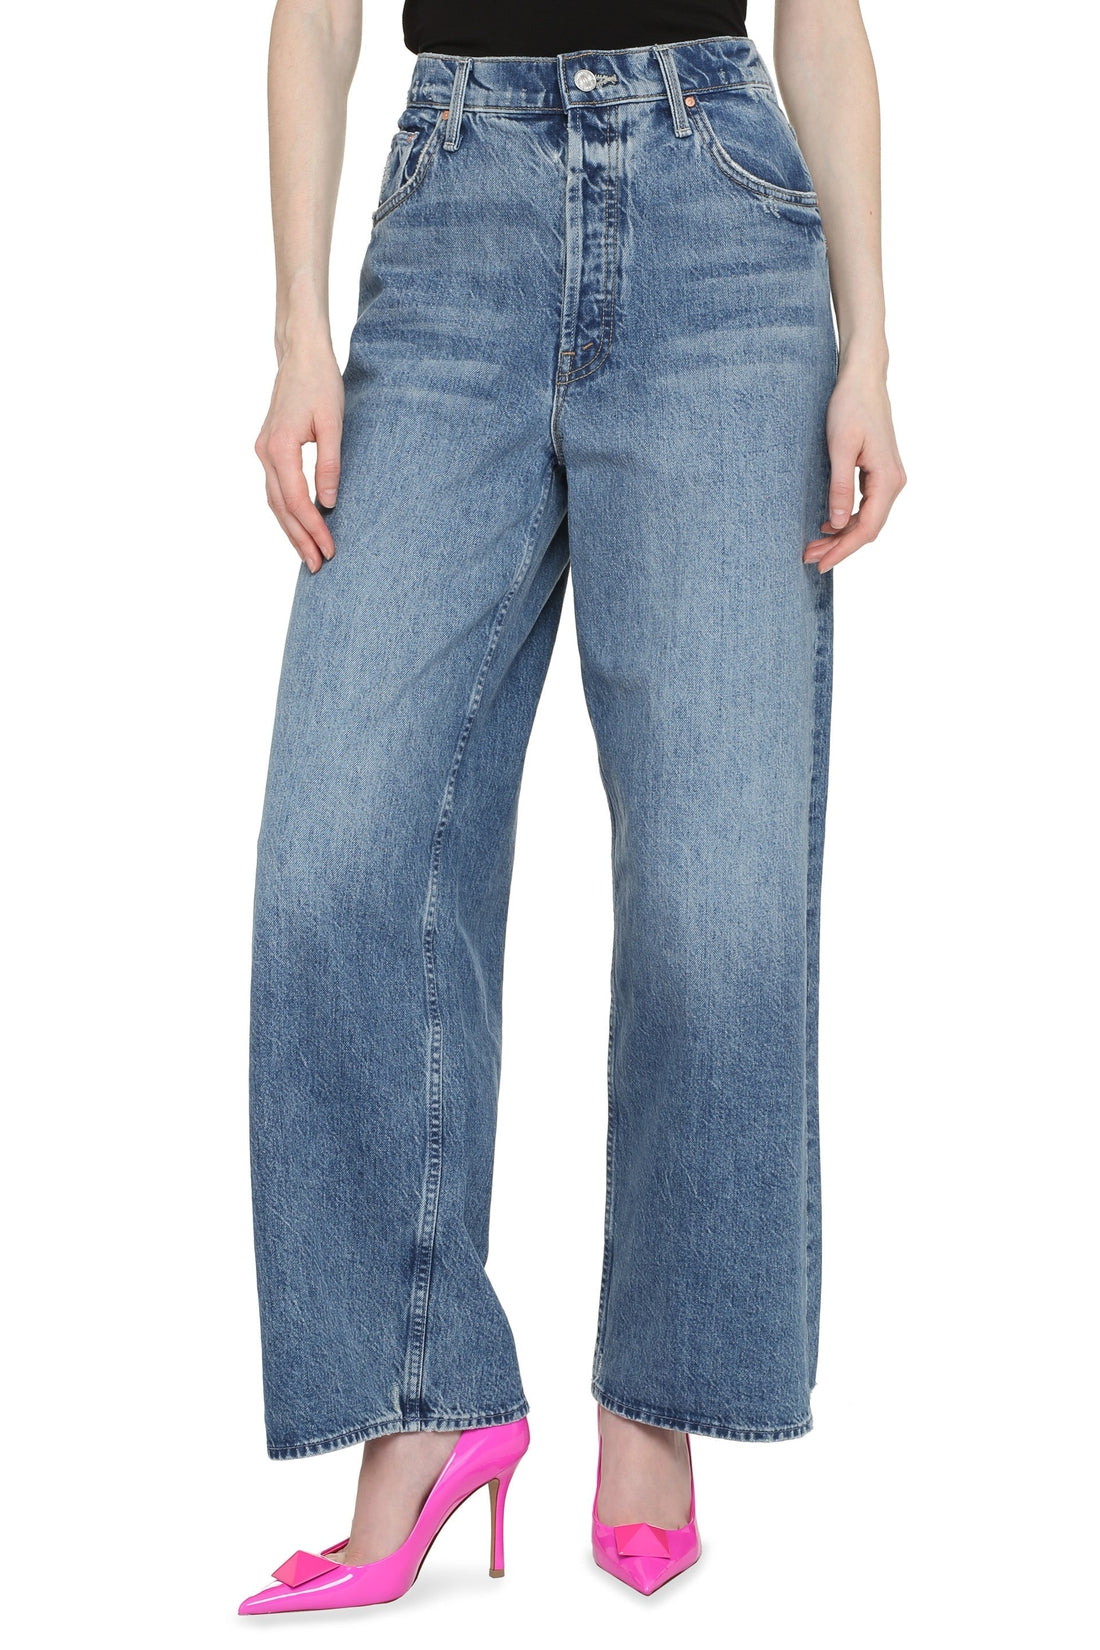 Mother-OUTLET-SALE-High Waisted Spinner Skimp jeans-ARCHIVIST